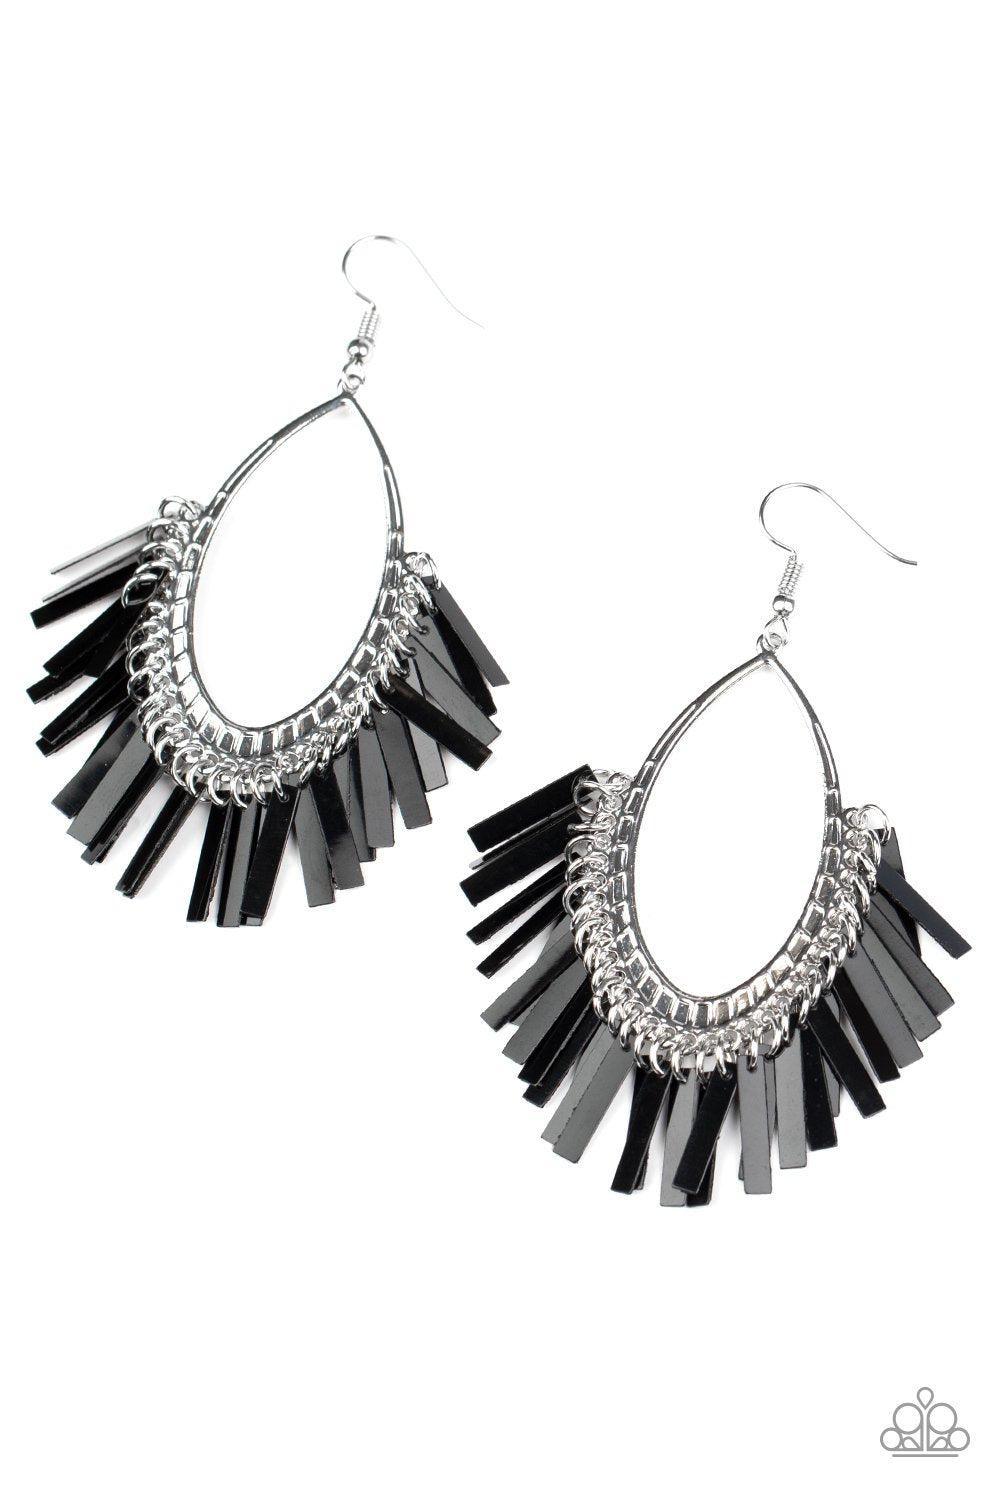 Fine-Tuned Machine Black Fringe Earrings - Paparazzi Accessories - lightbox -CarasShop.com - $5 Jewelry by Cara Jewels